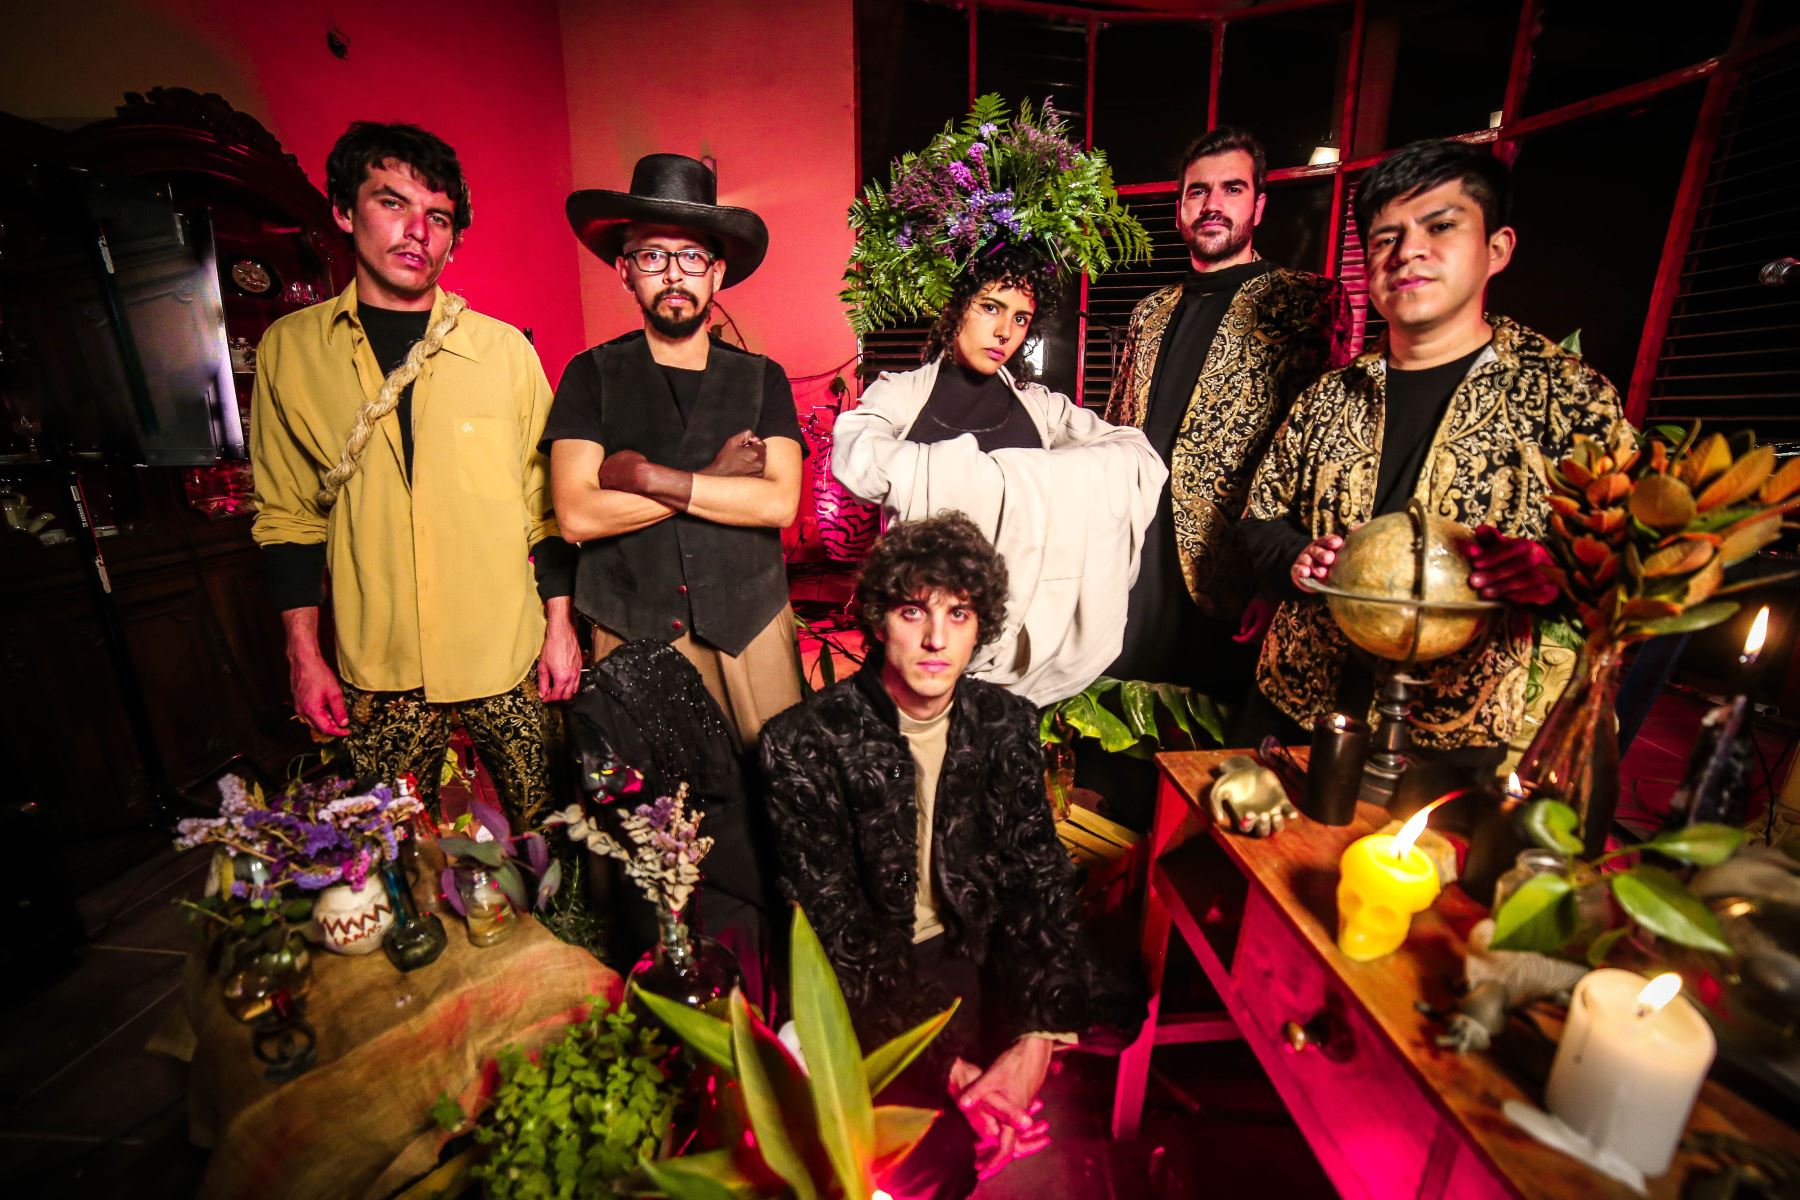 Hit La Rosa lanza su segunda producción discográfica “Ceres Entrópicos”.